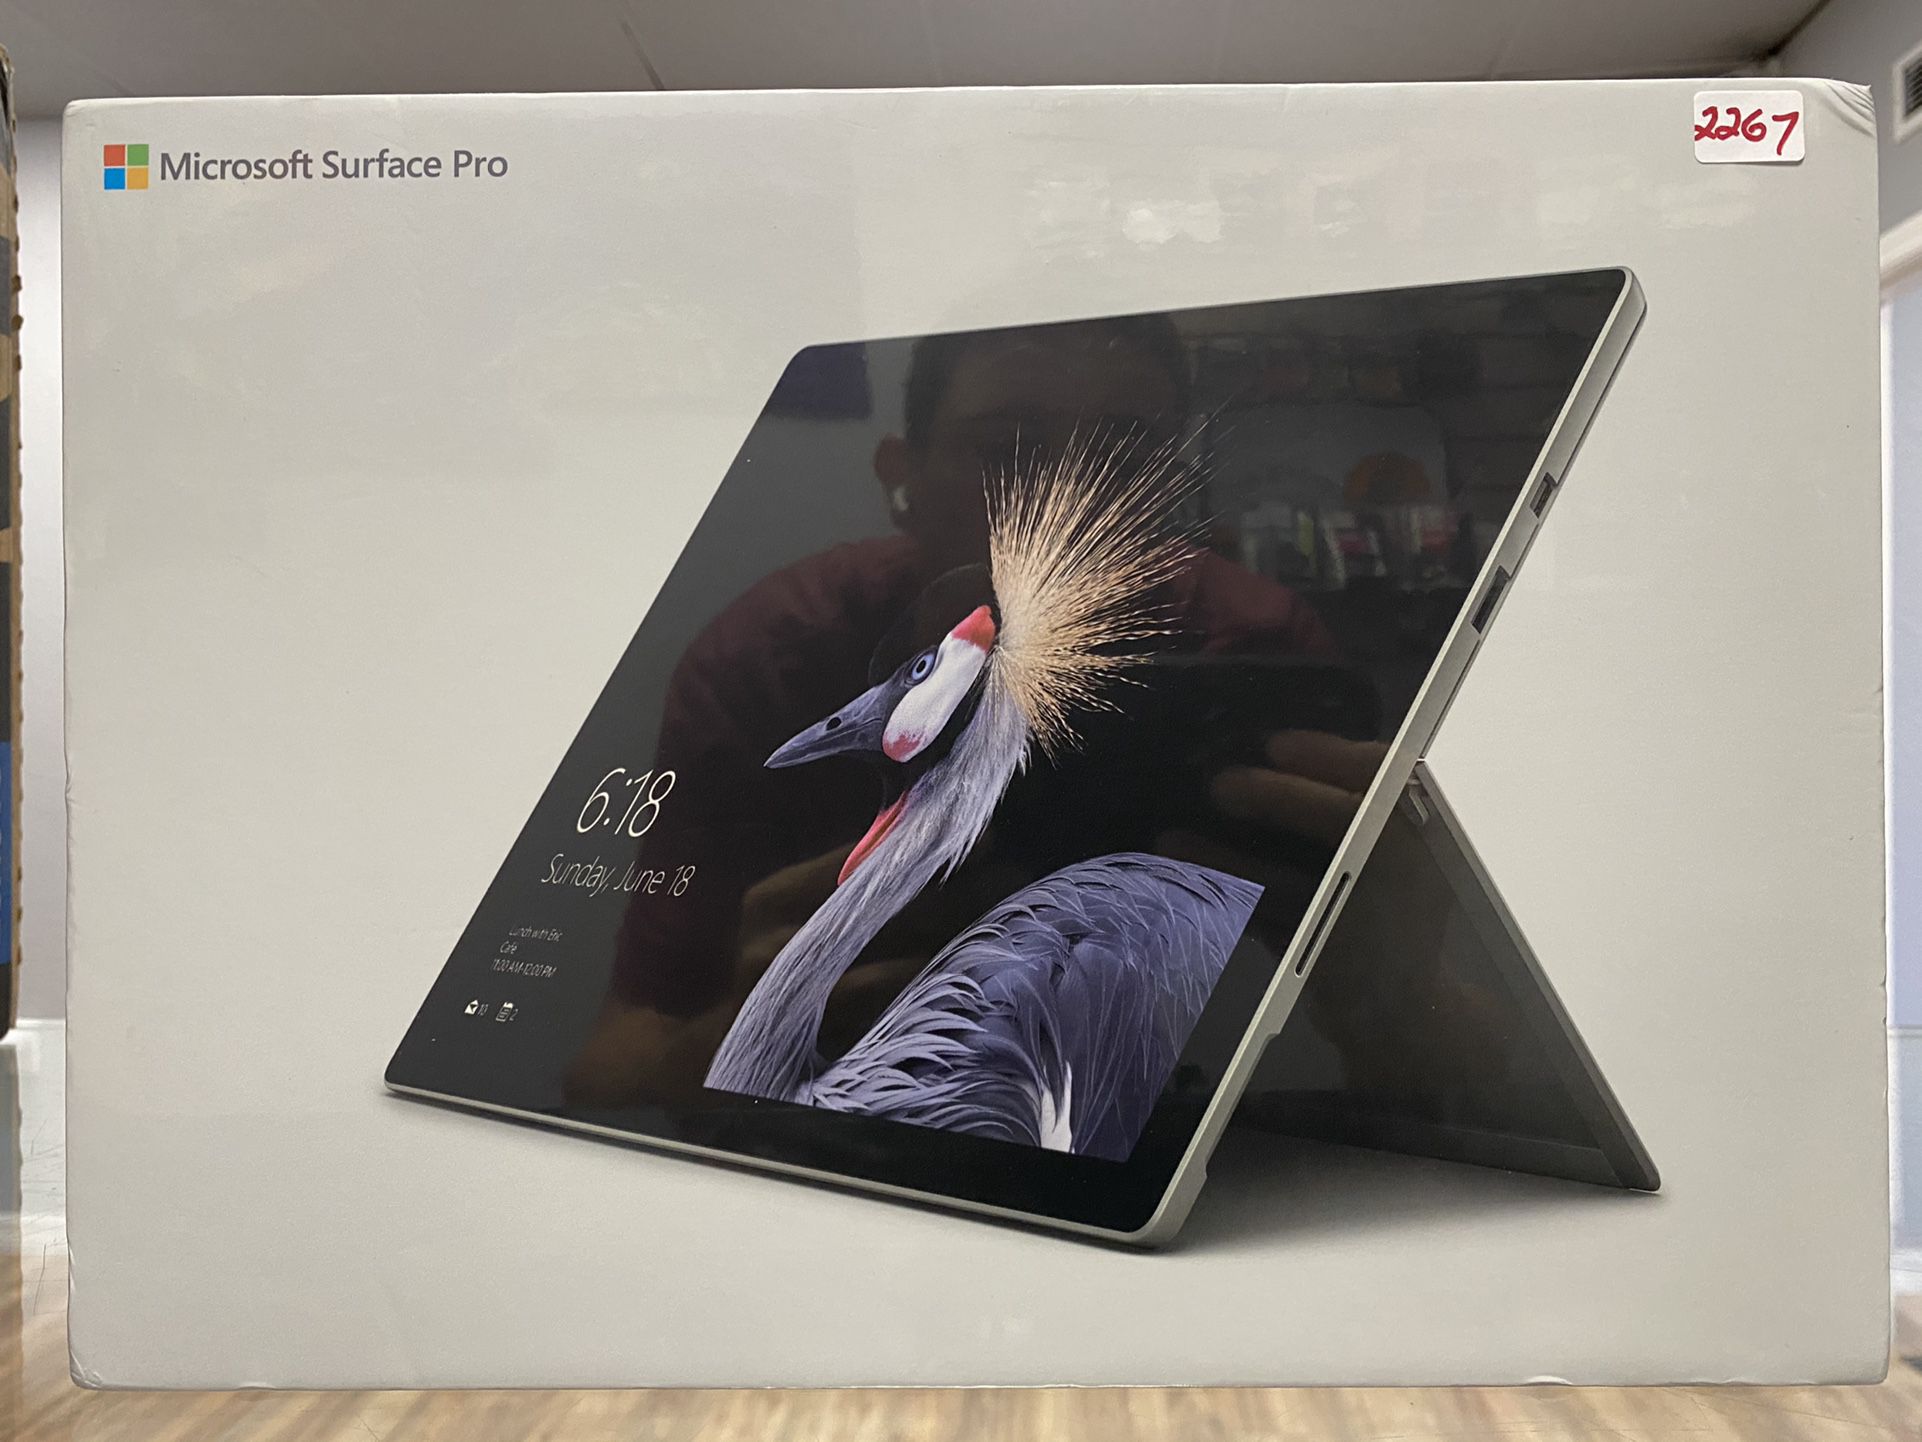 Microsoft Surface Pro LTE 12.3" Touch i5-7300U 8GB RAM 256GB SSD Win 10 Pro